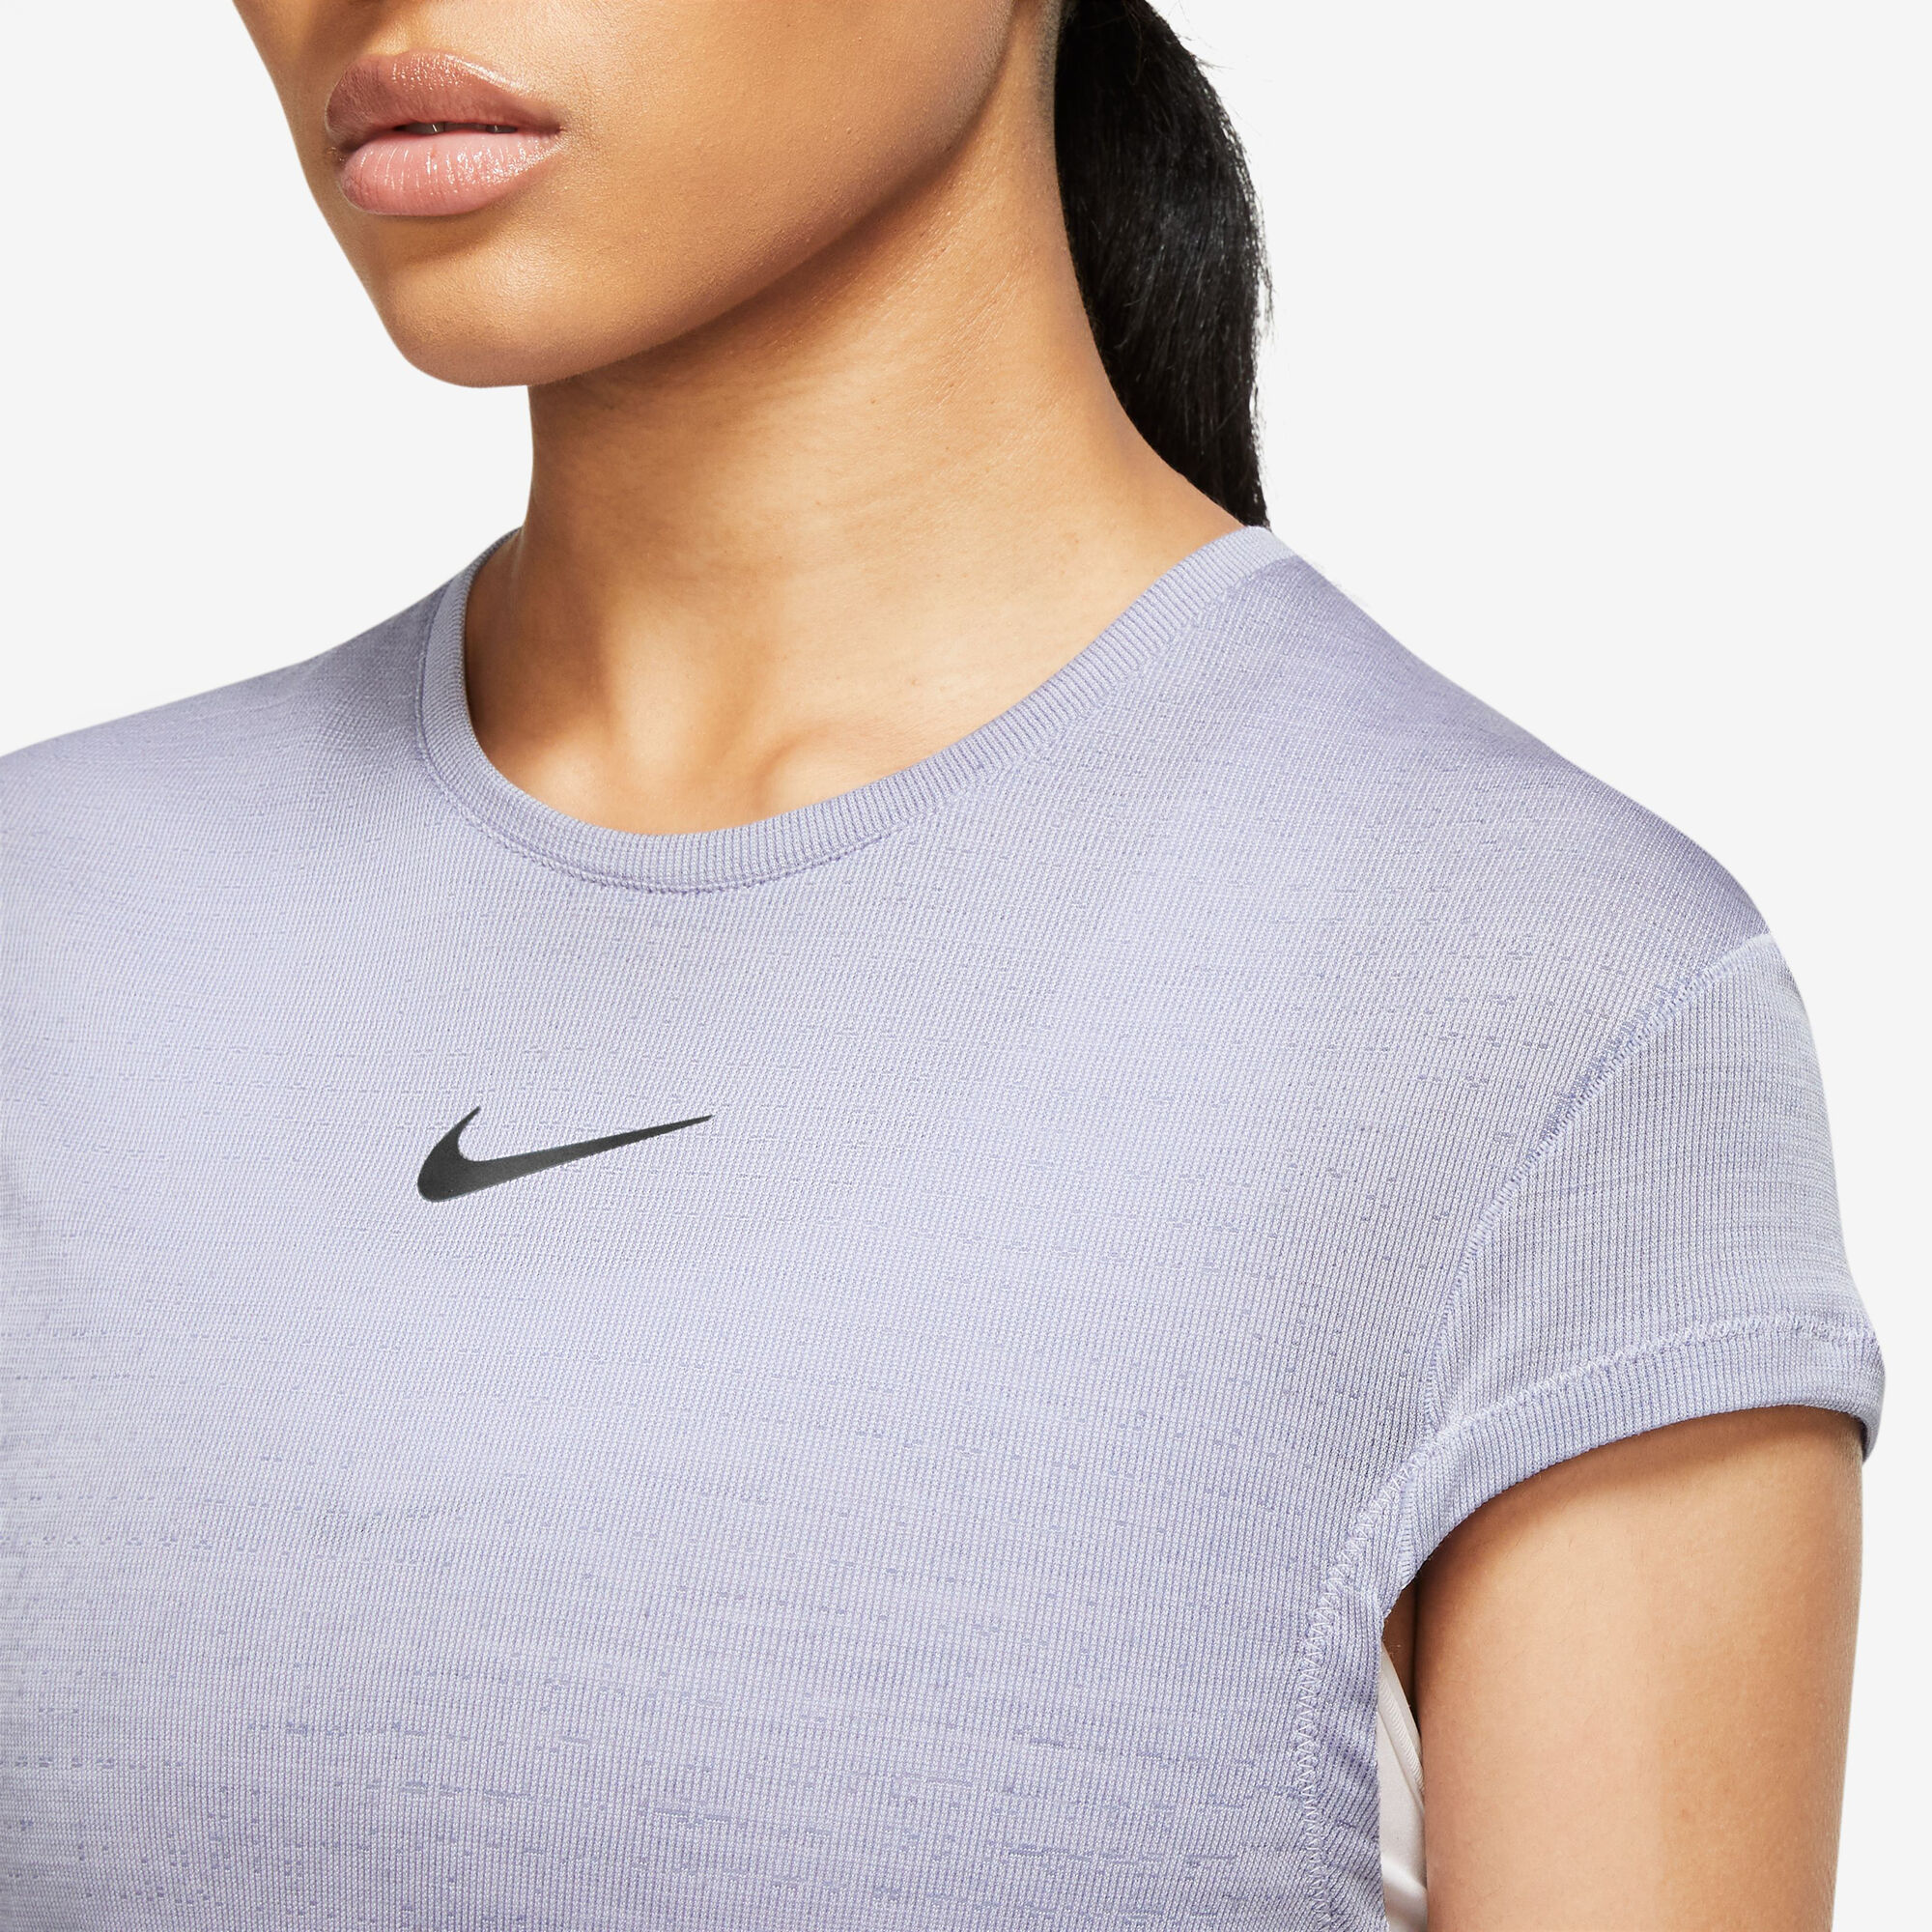 Run Running | Shirts Point Buy Women Running COM online Dri-Fit Division Nike Lilac